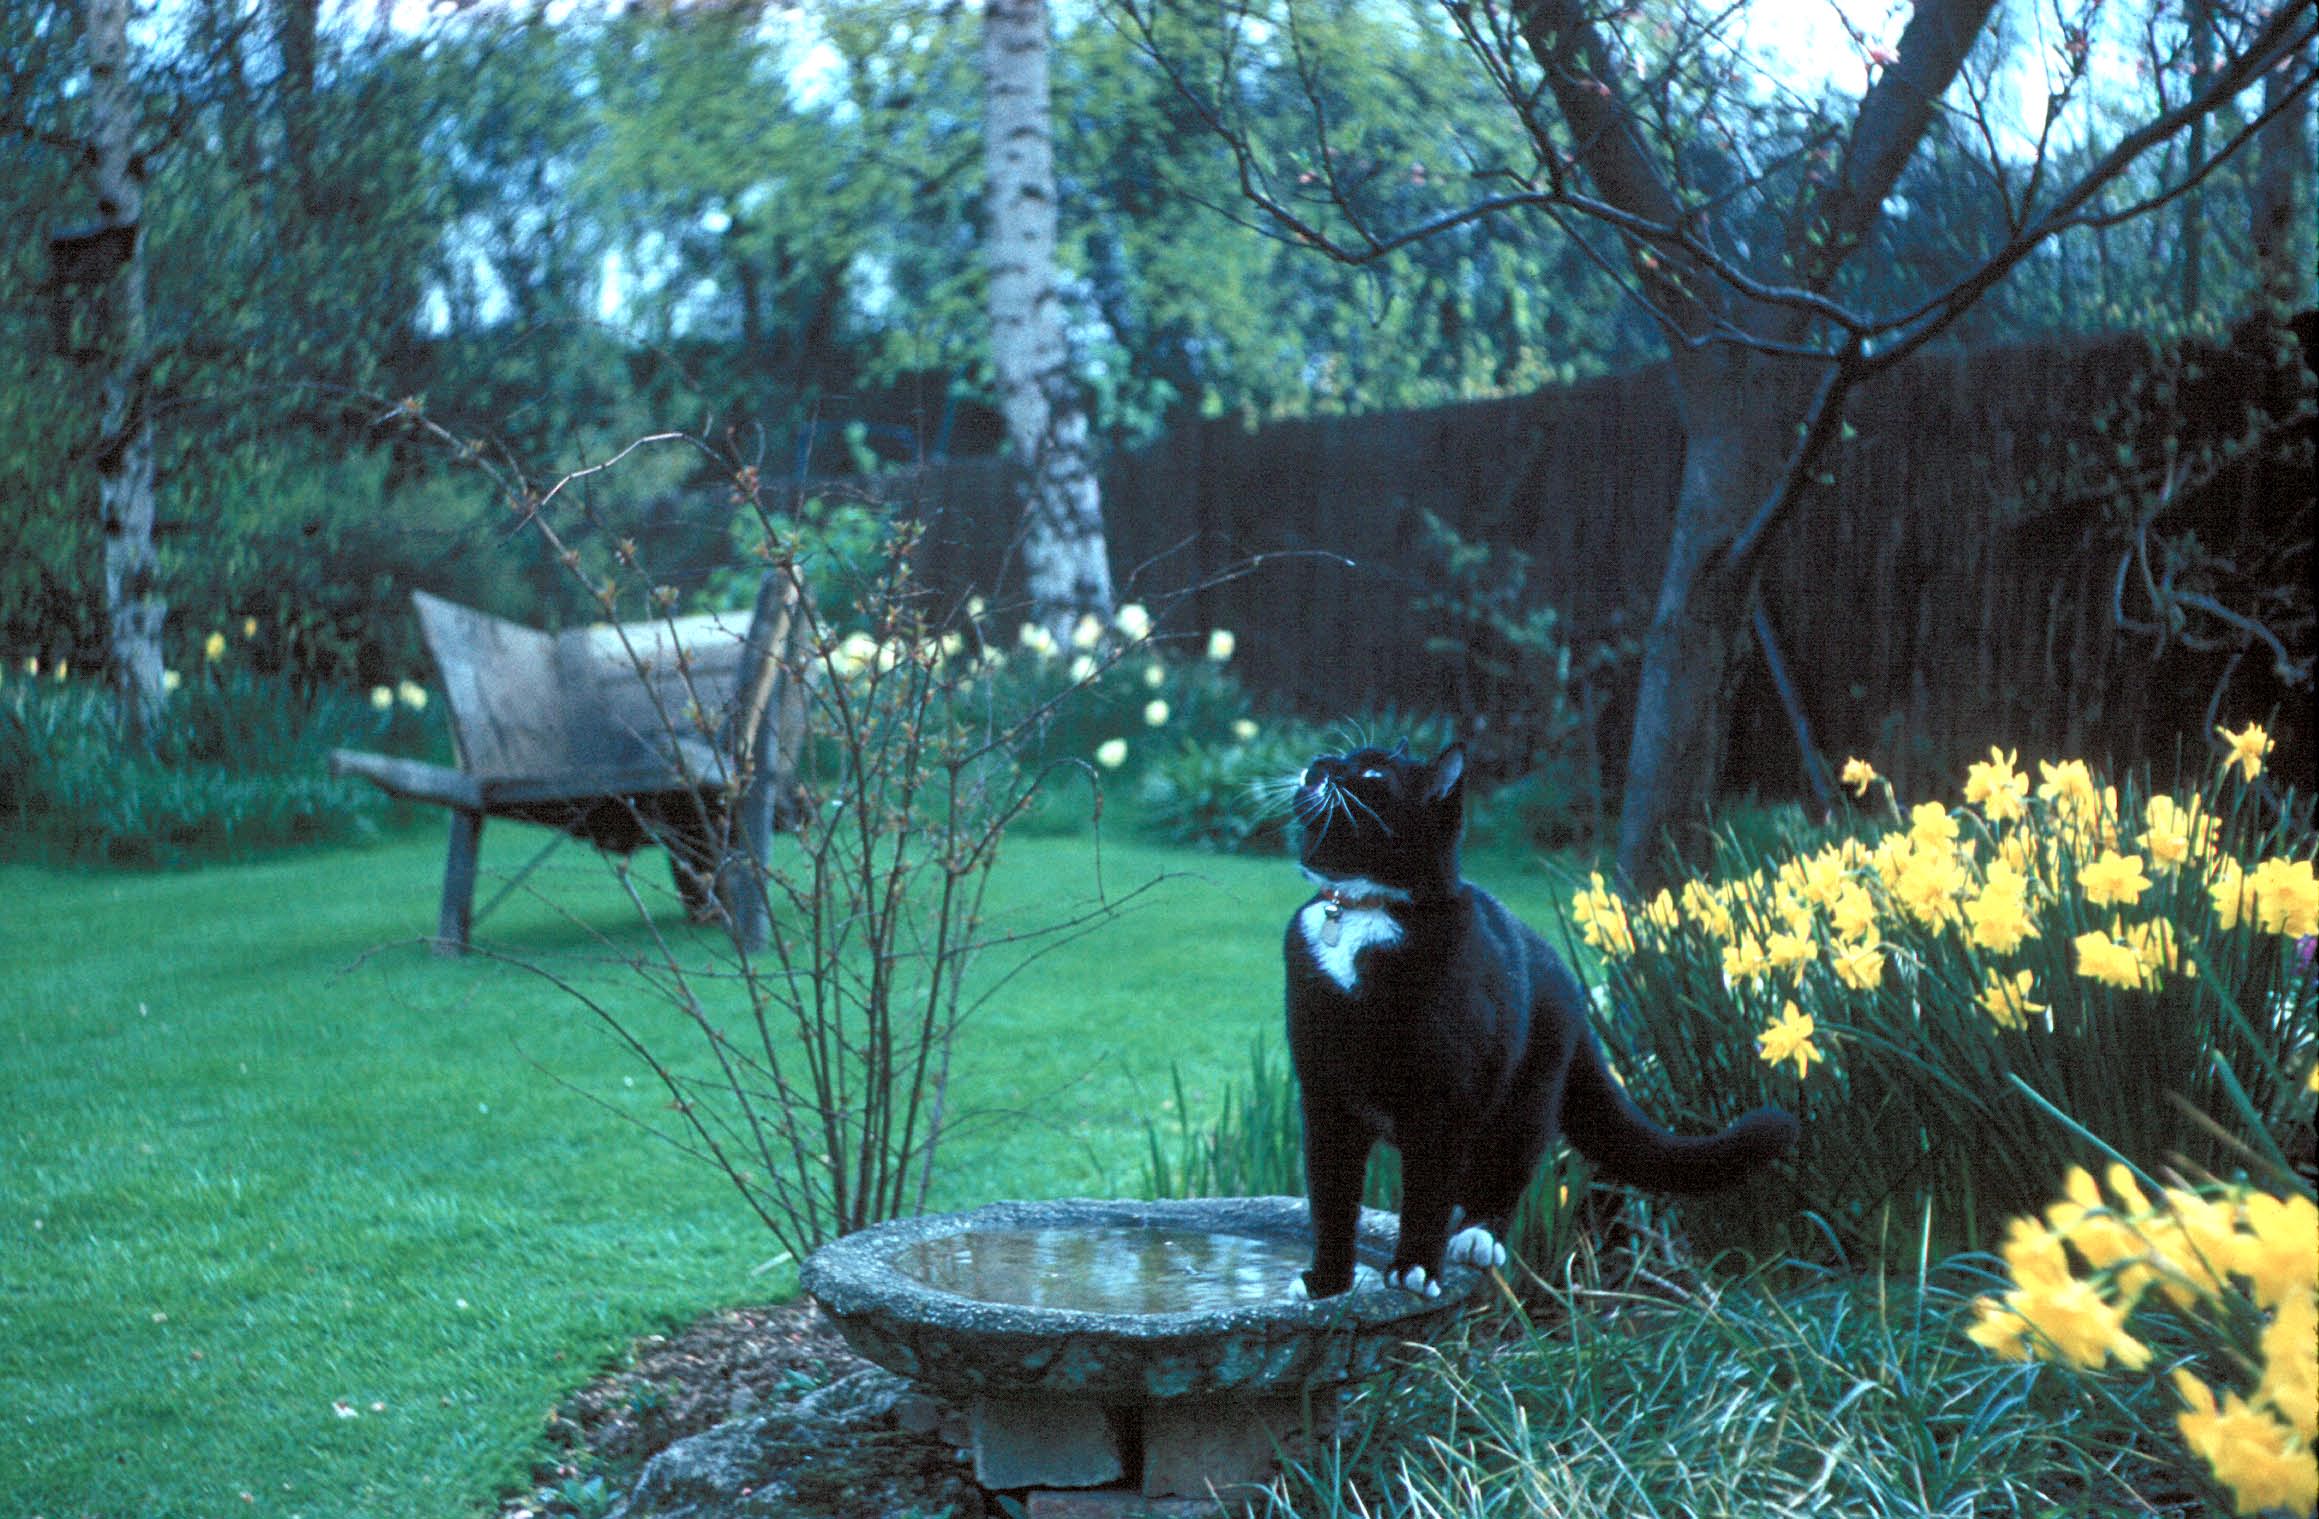 April 1960 Koshka in the garden at Hampton